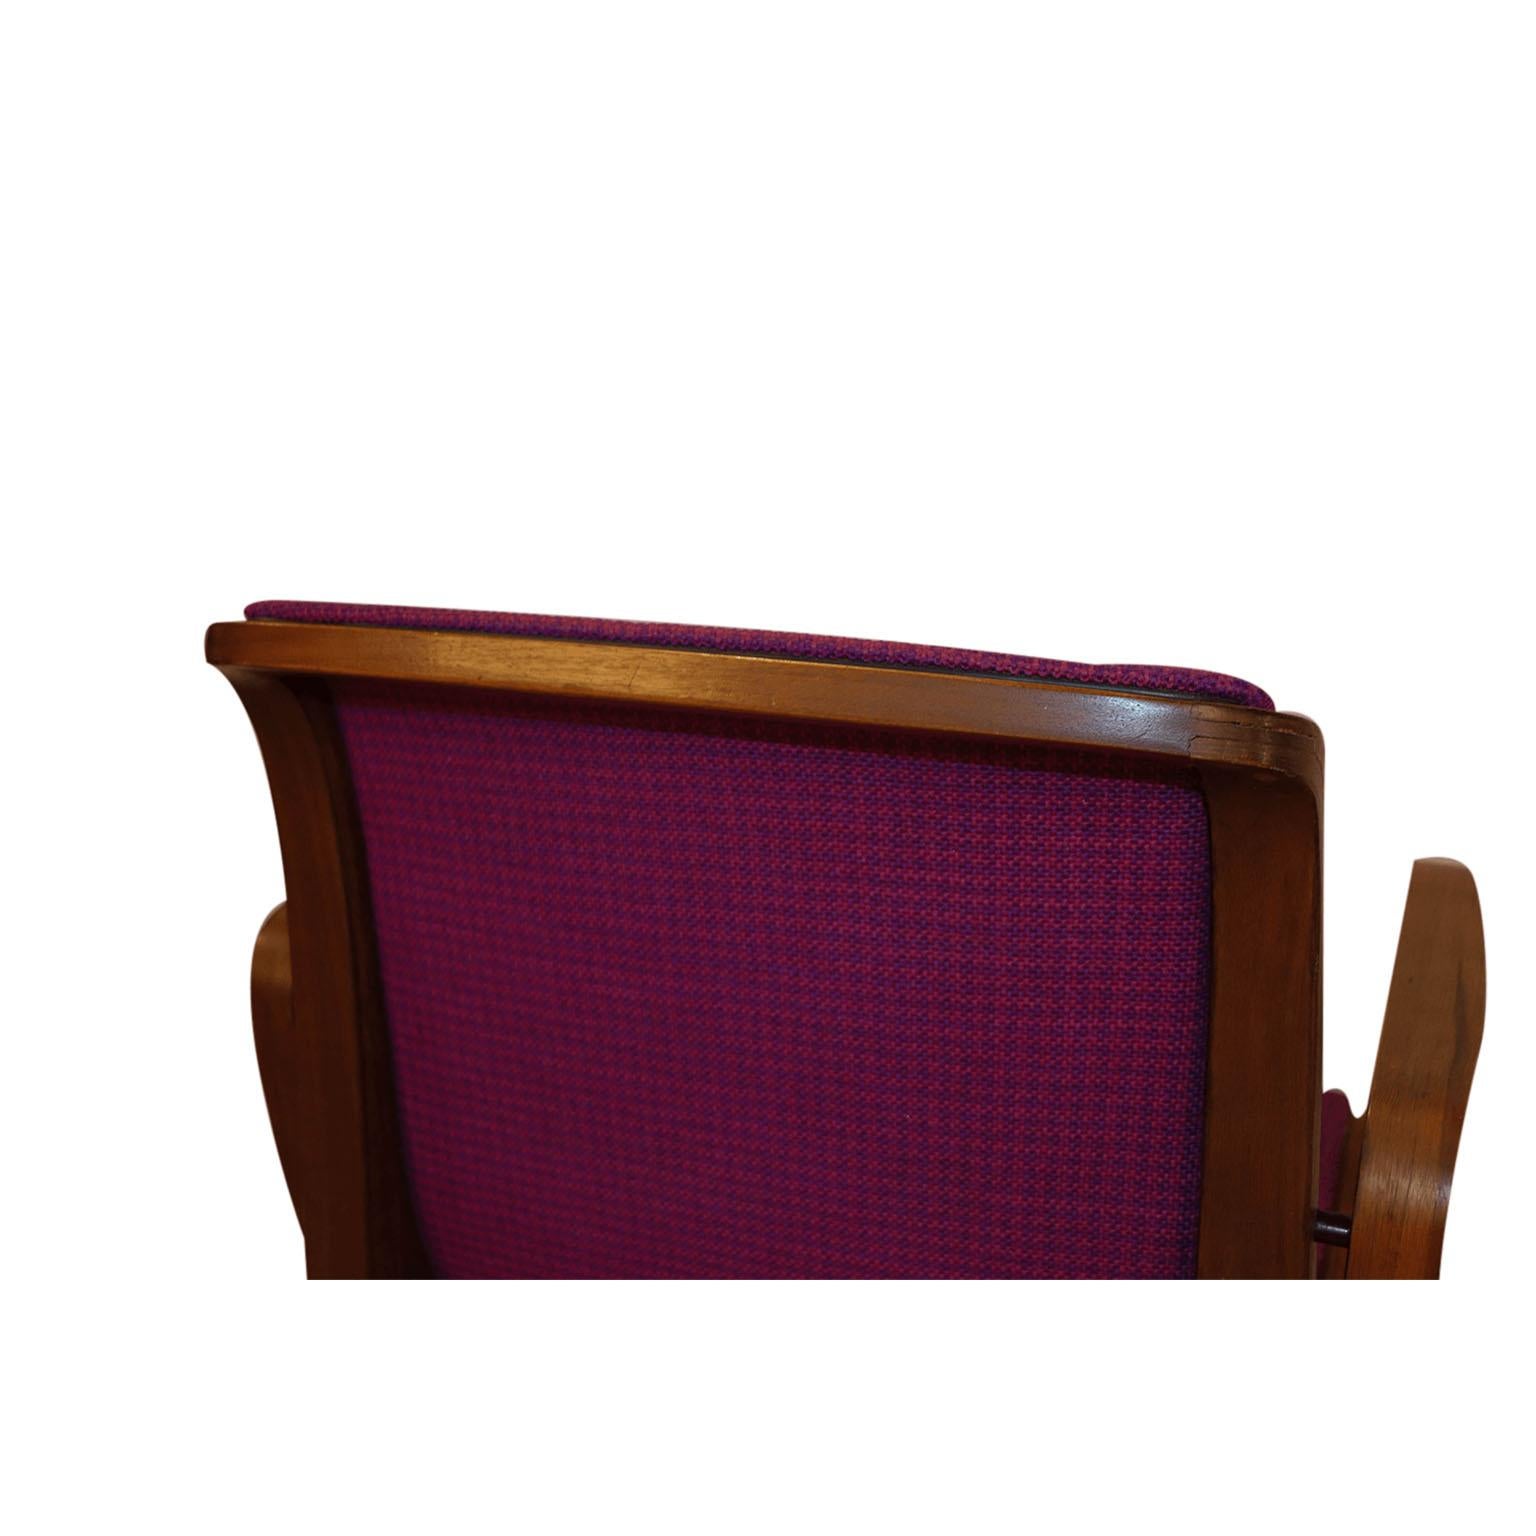 American Midcentury Bill Stephens Knoll Bentwood Chair